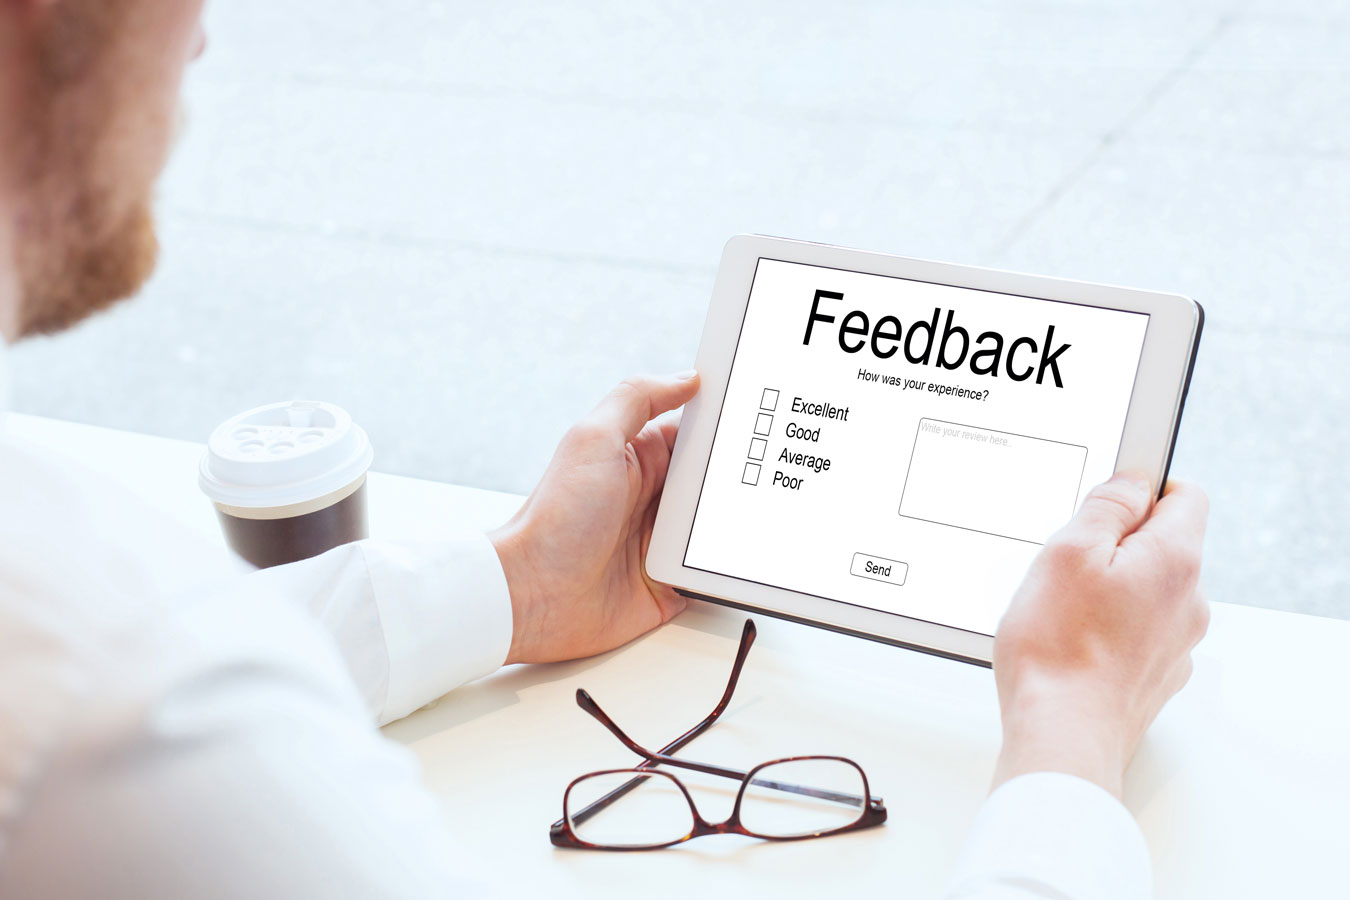 Customer feedback survey service - LoyaltyLoop